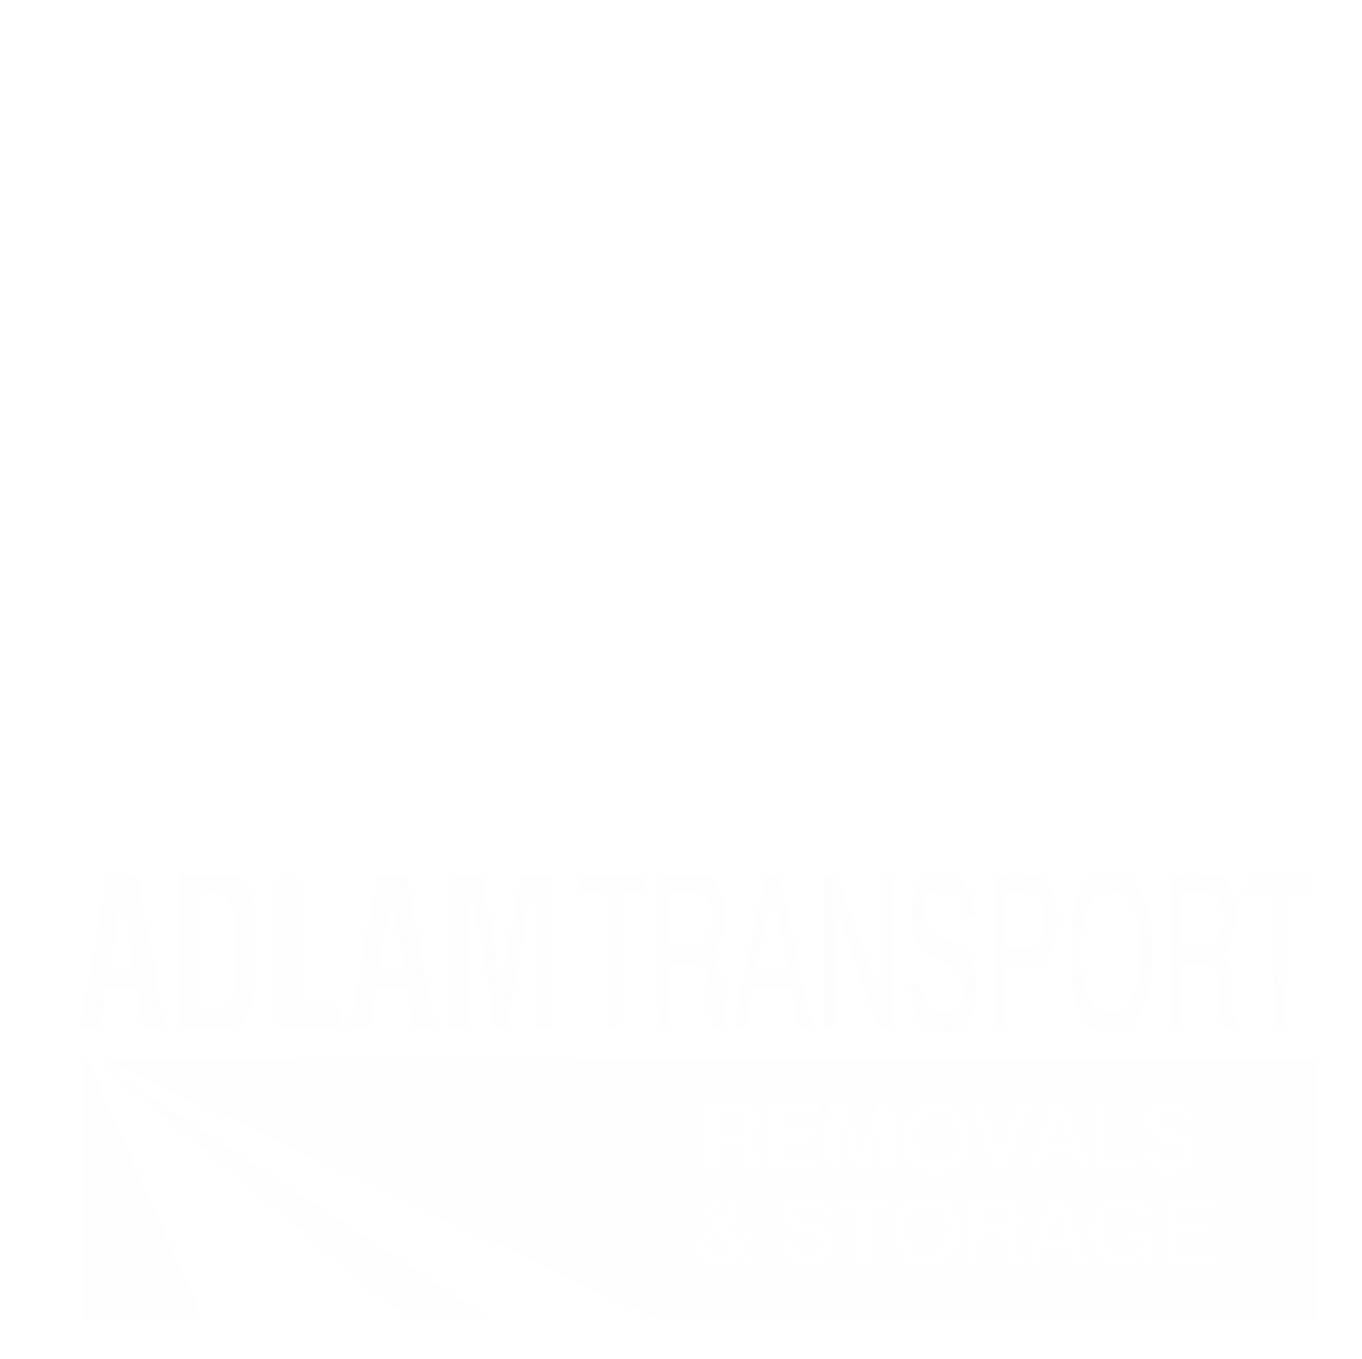 Adlam transport partnership